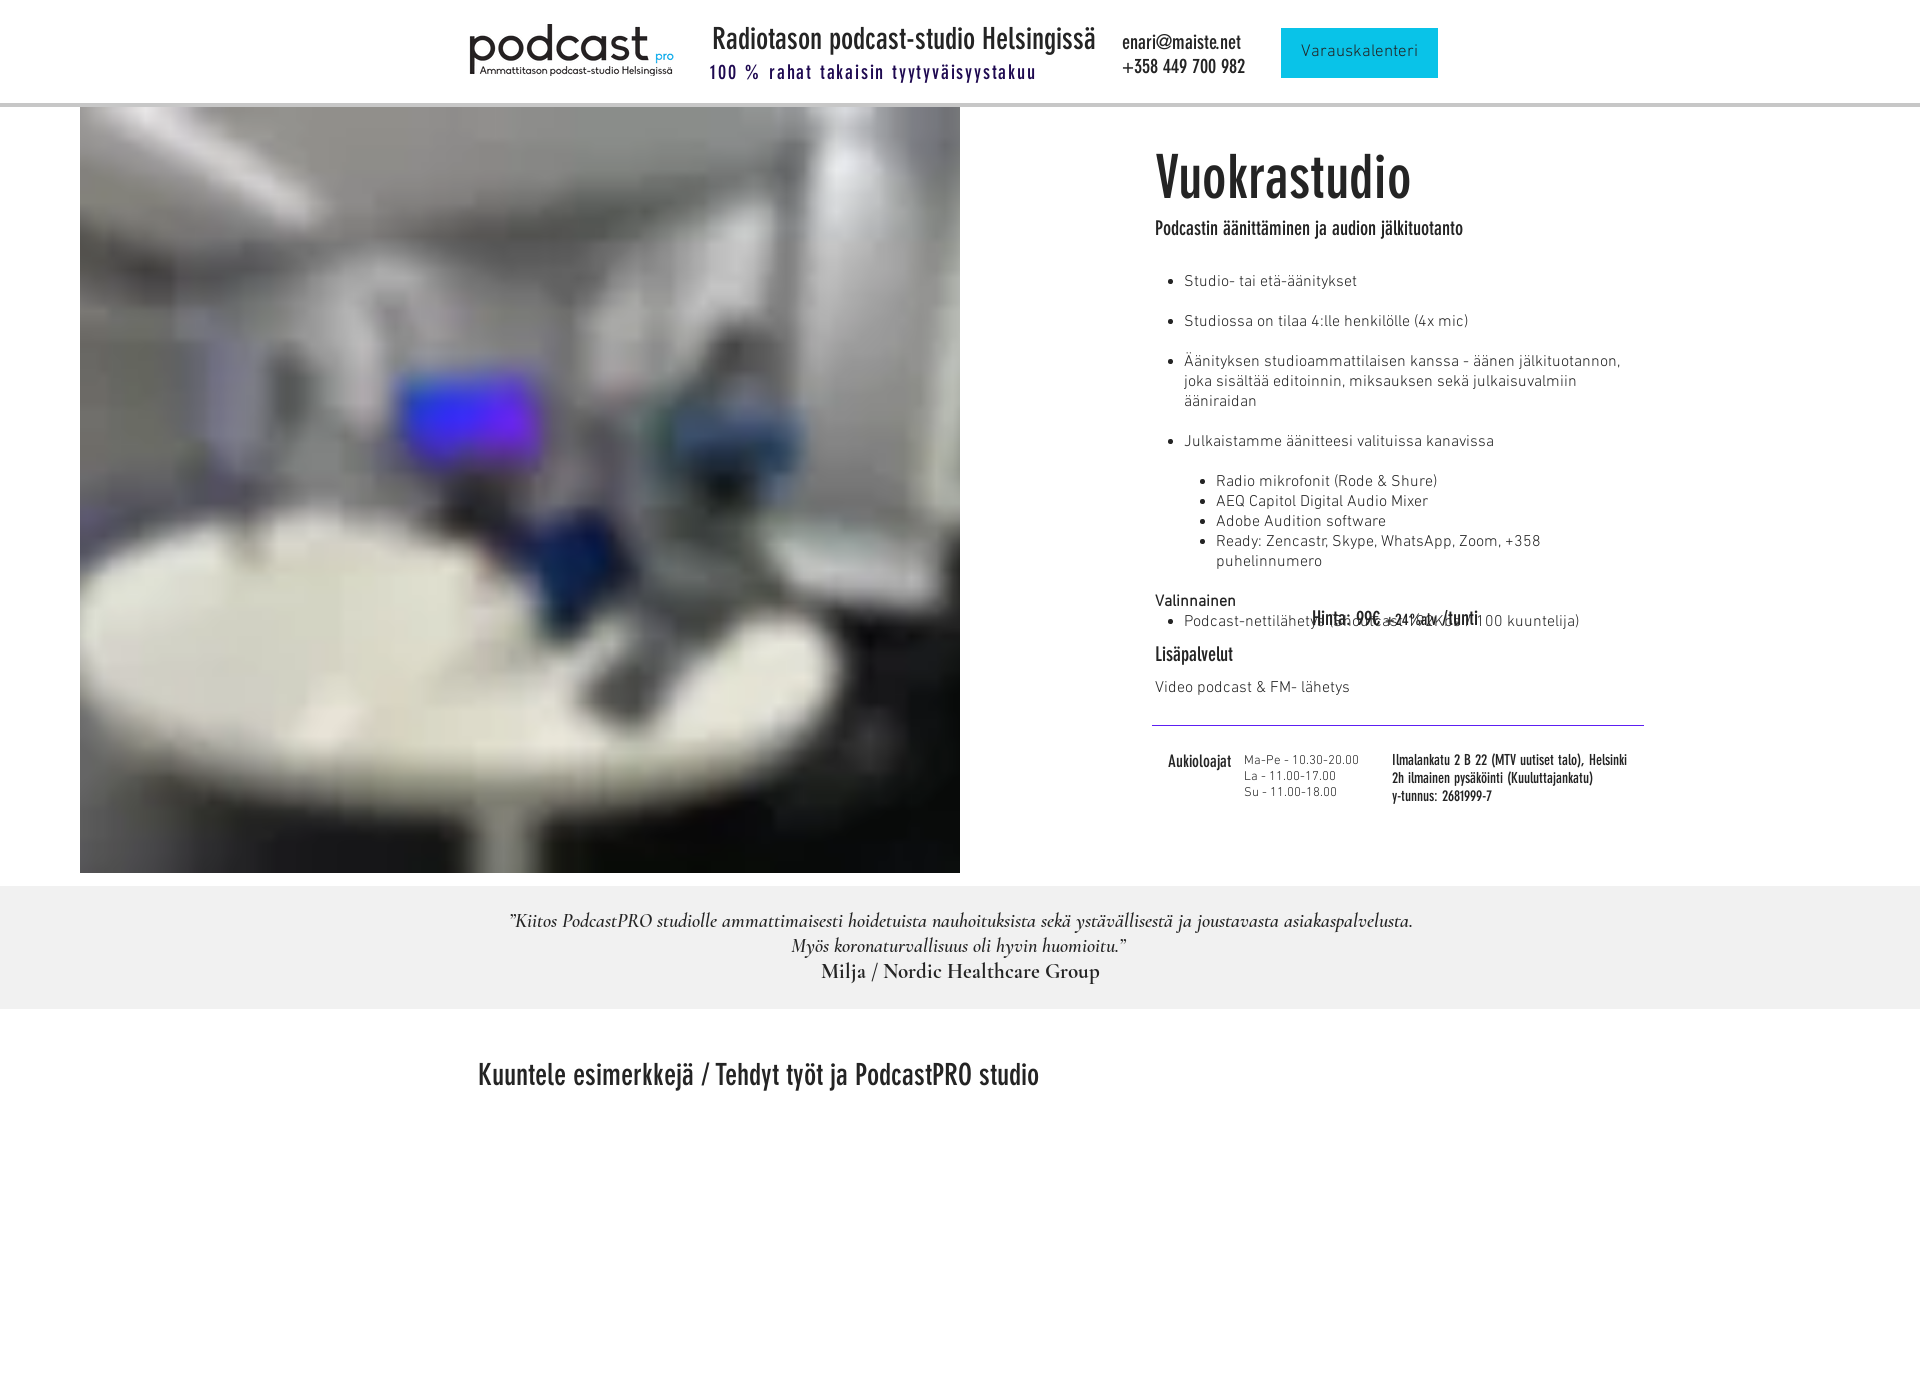 Näyttökuva podcastpro.fi